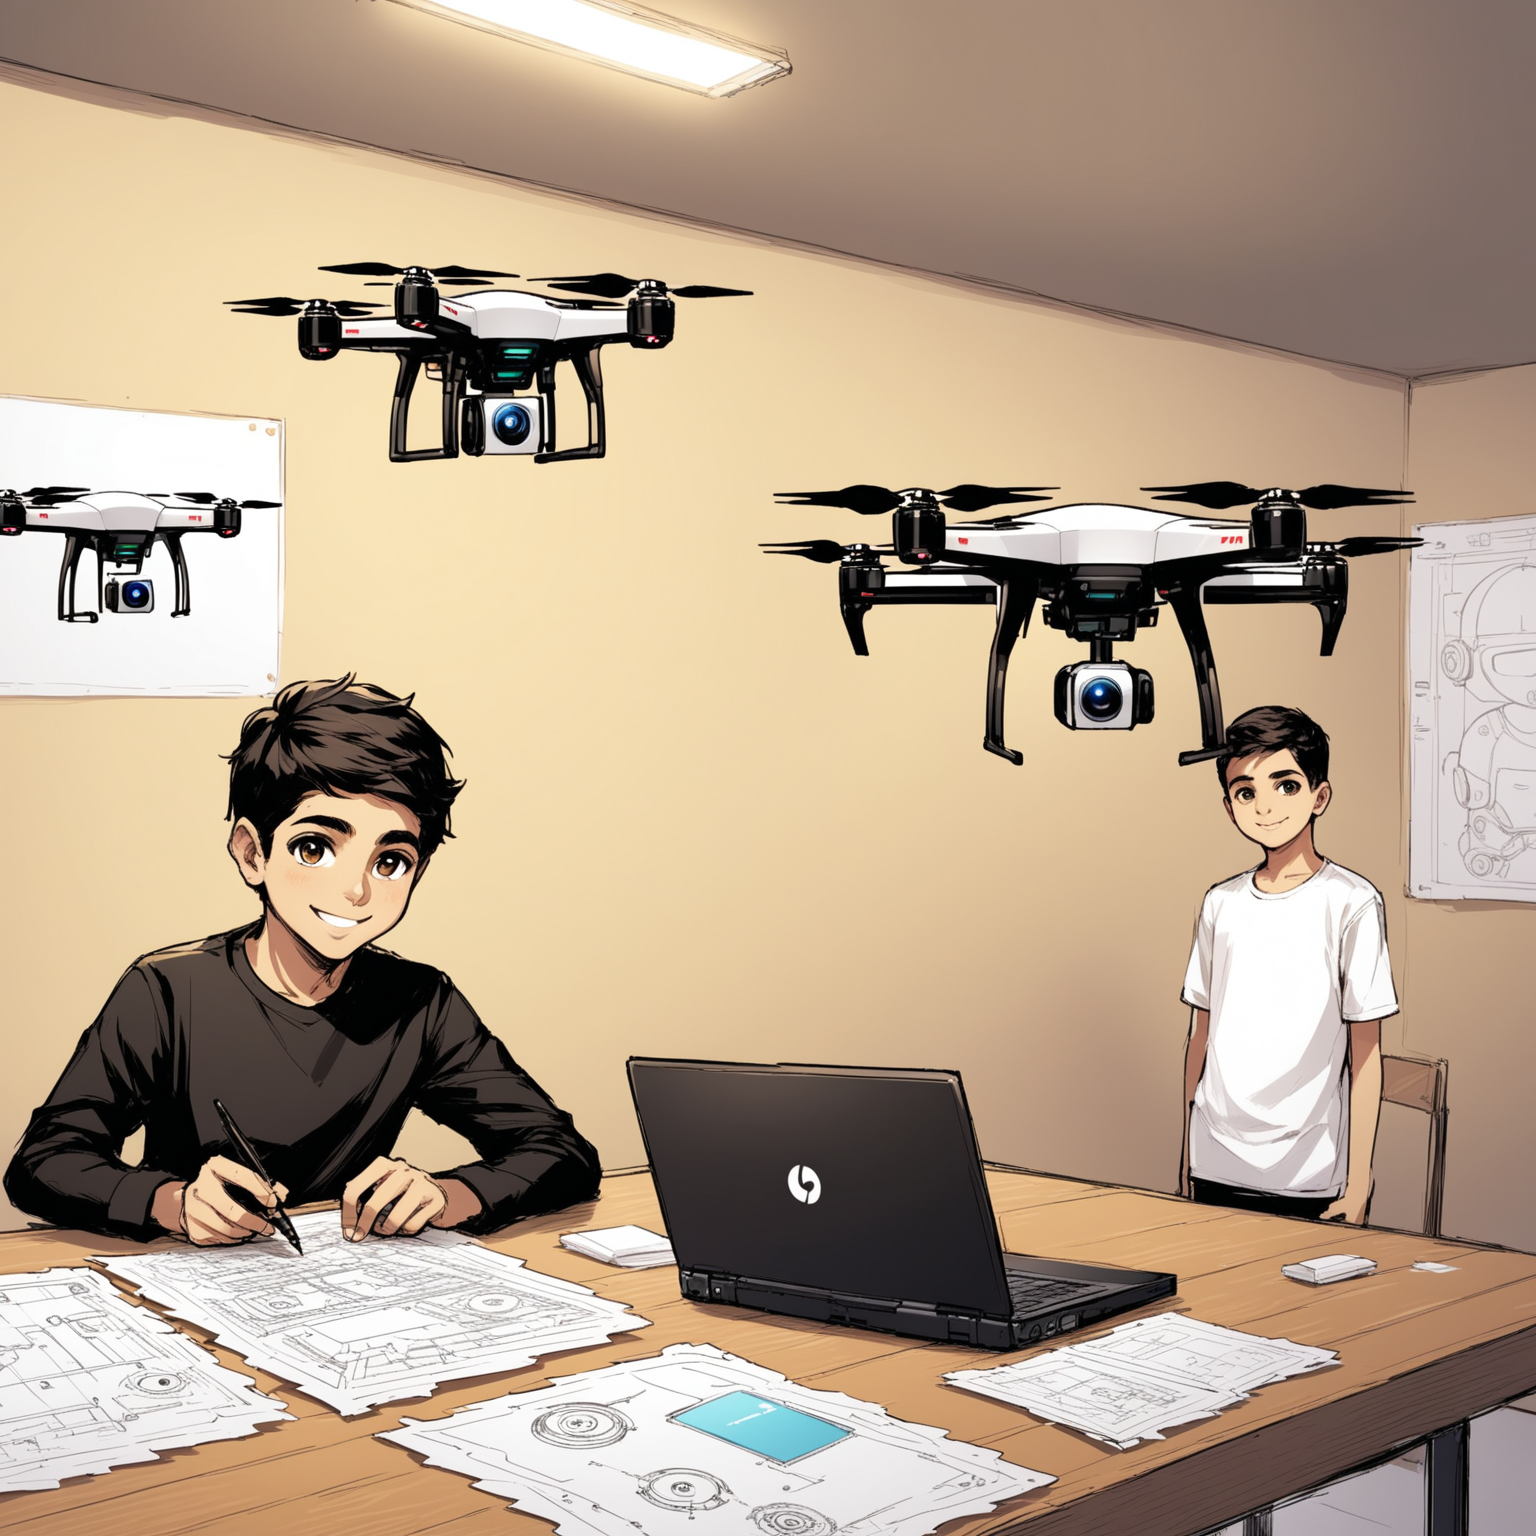 Persian Boys Designing Super Modern Drones in HighTech Workshop